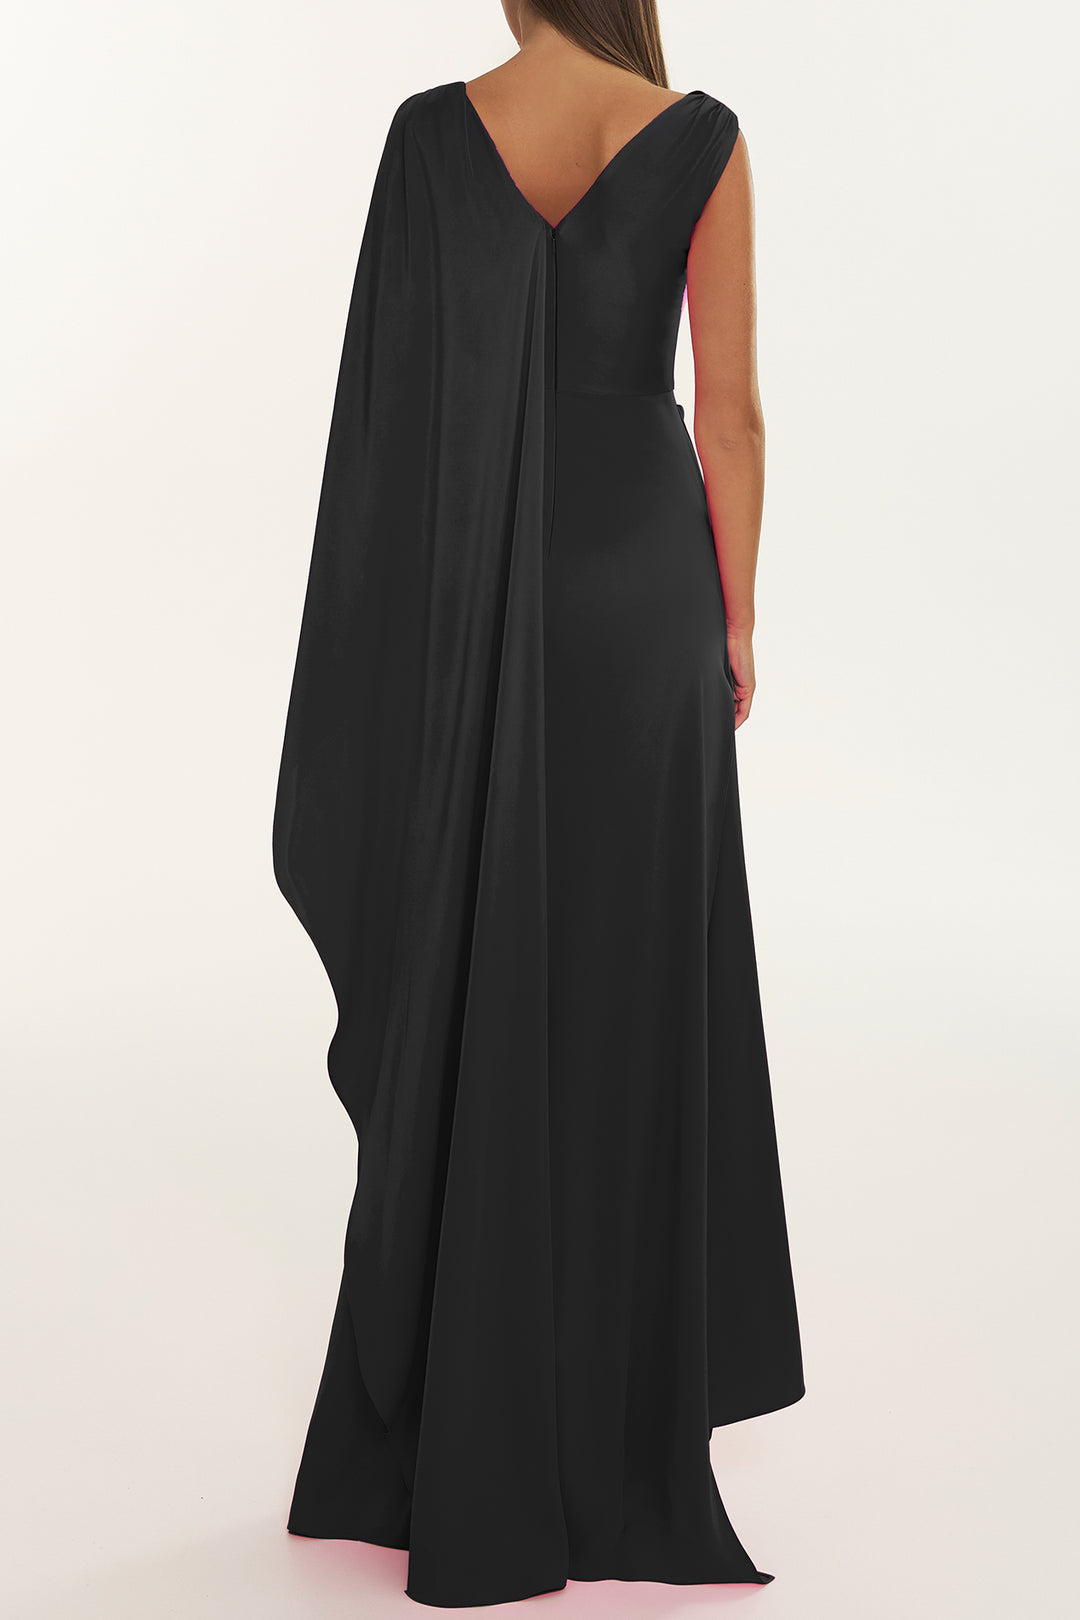 Cora Black Caped Asymmetrical Satin Crepe Dress